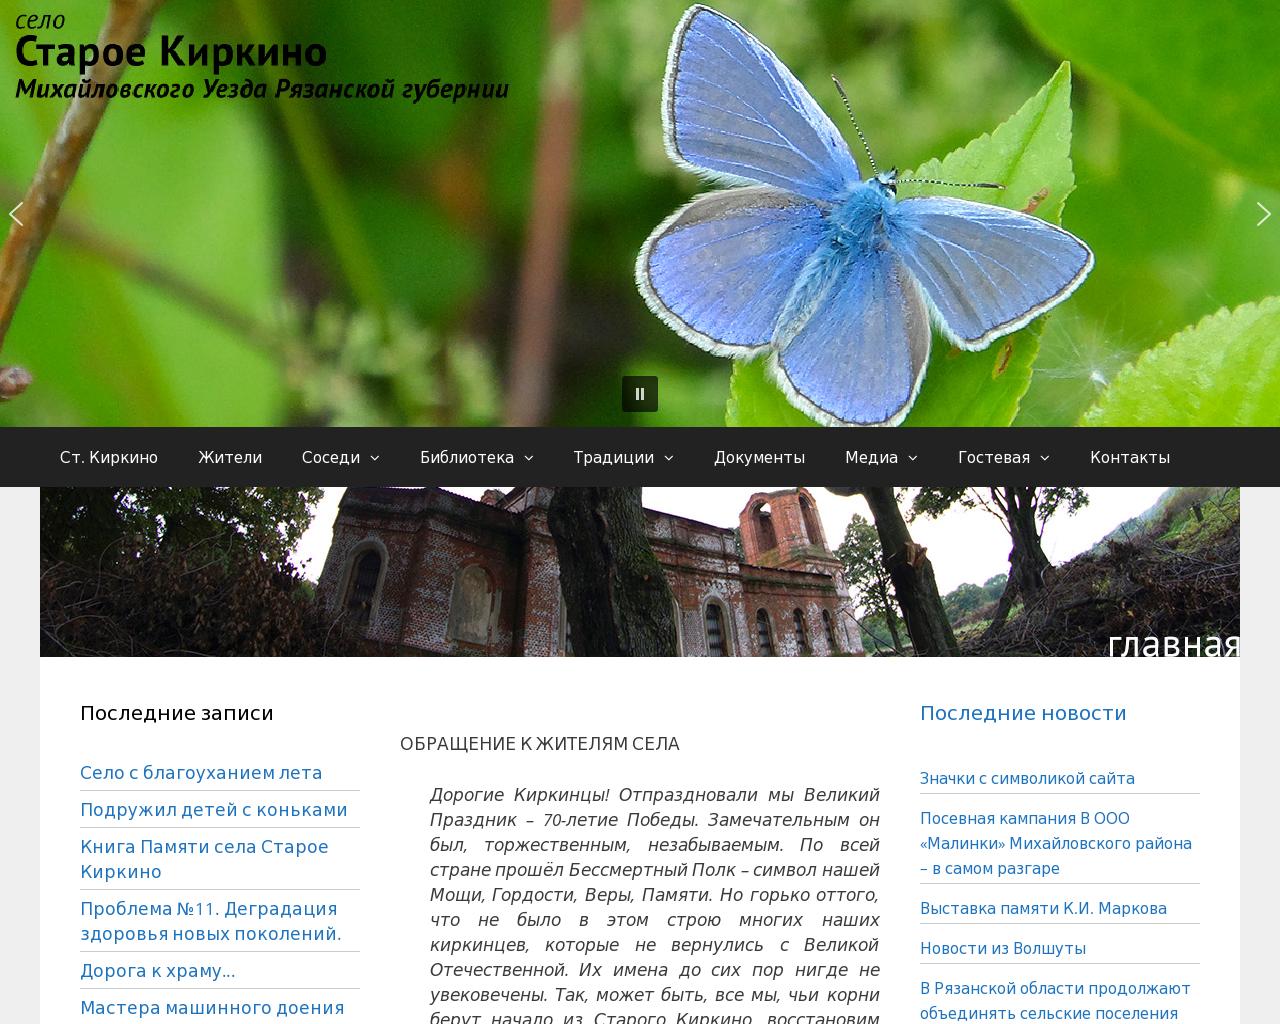 Изображение сайта kirkino.ru в разрешении 1280x1024